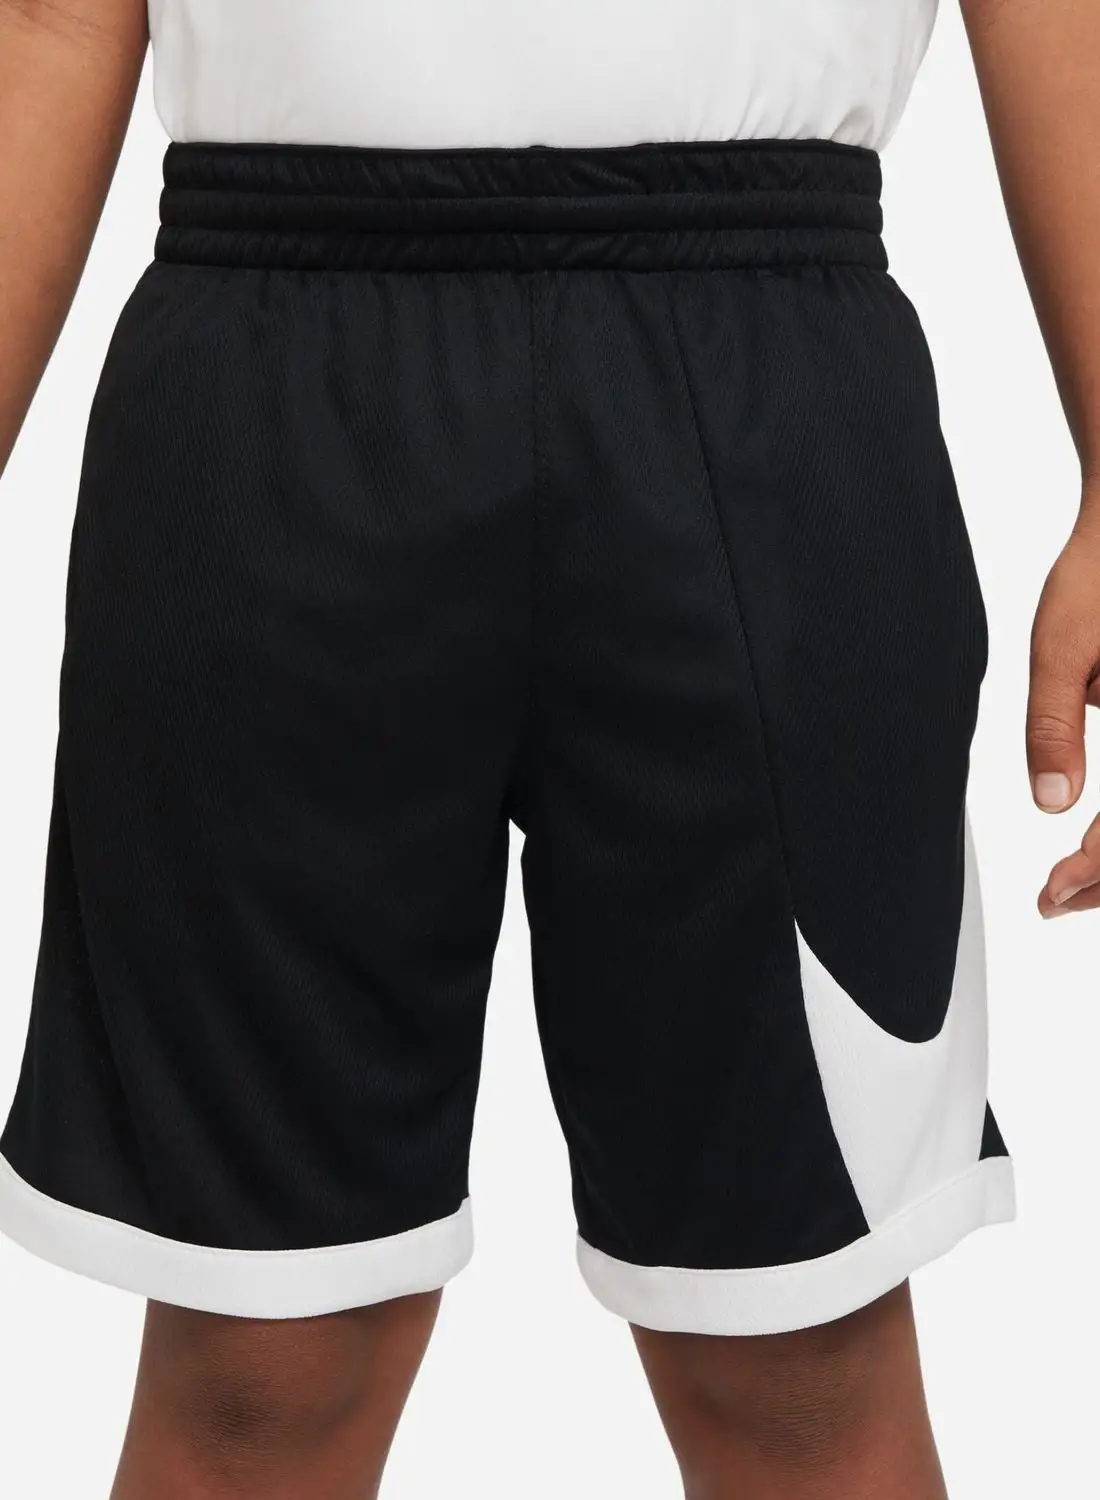 Nike Youth Dri-Fit Basketball Shorts